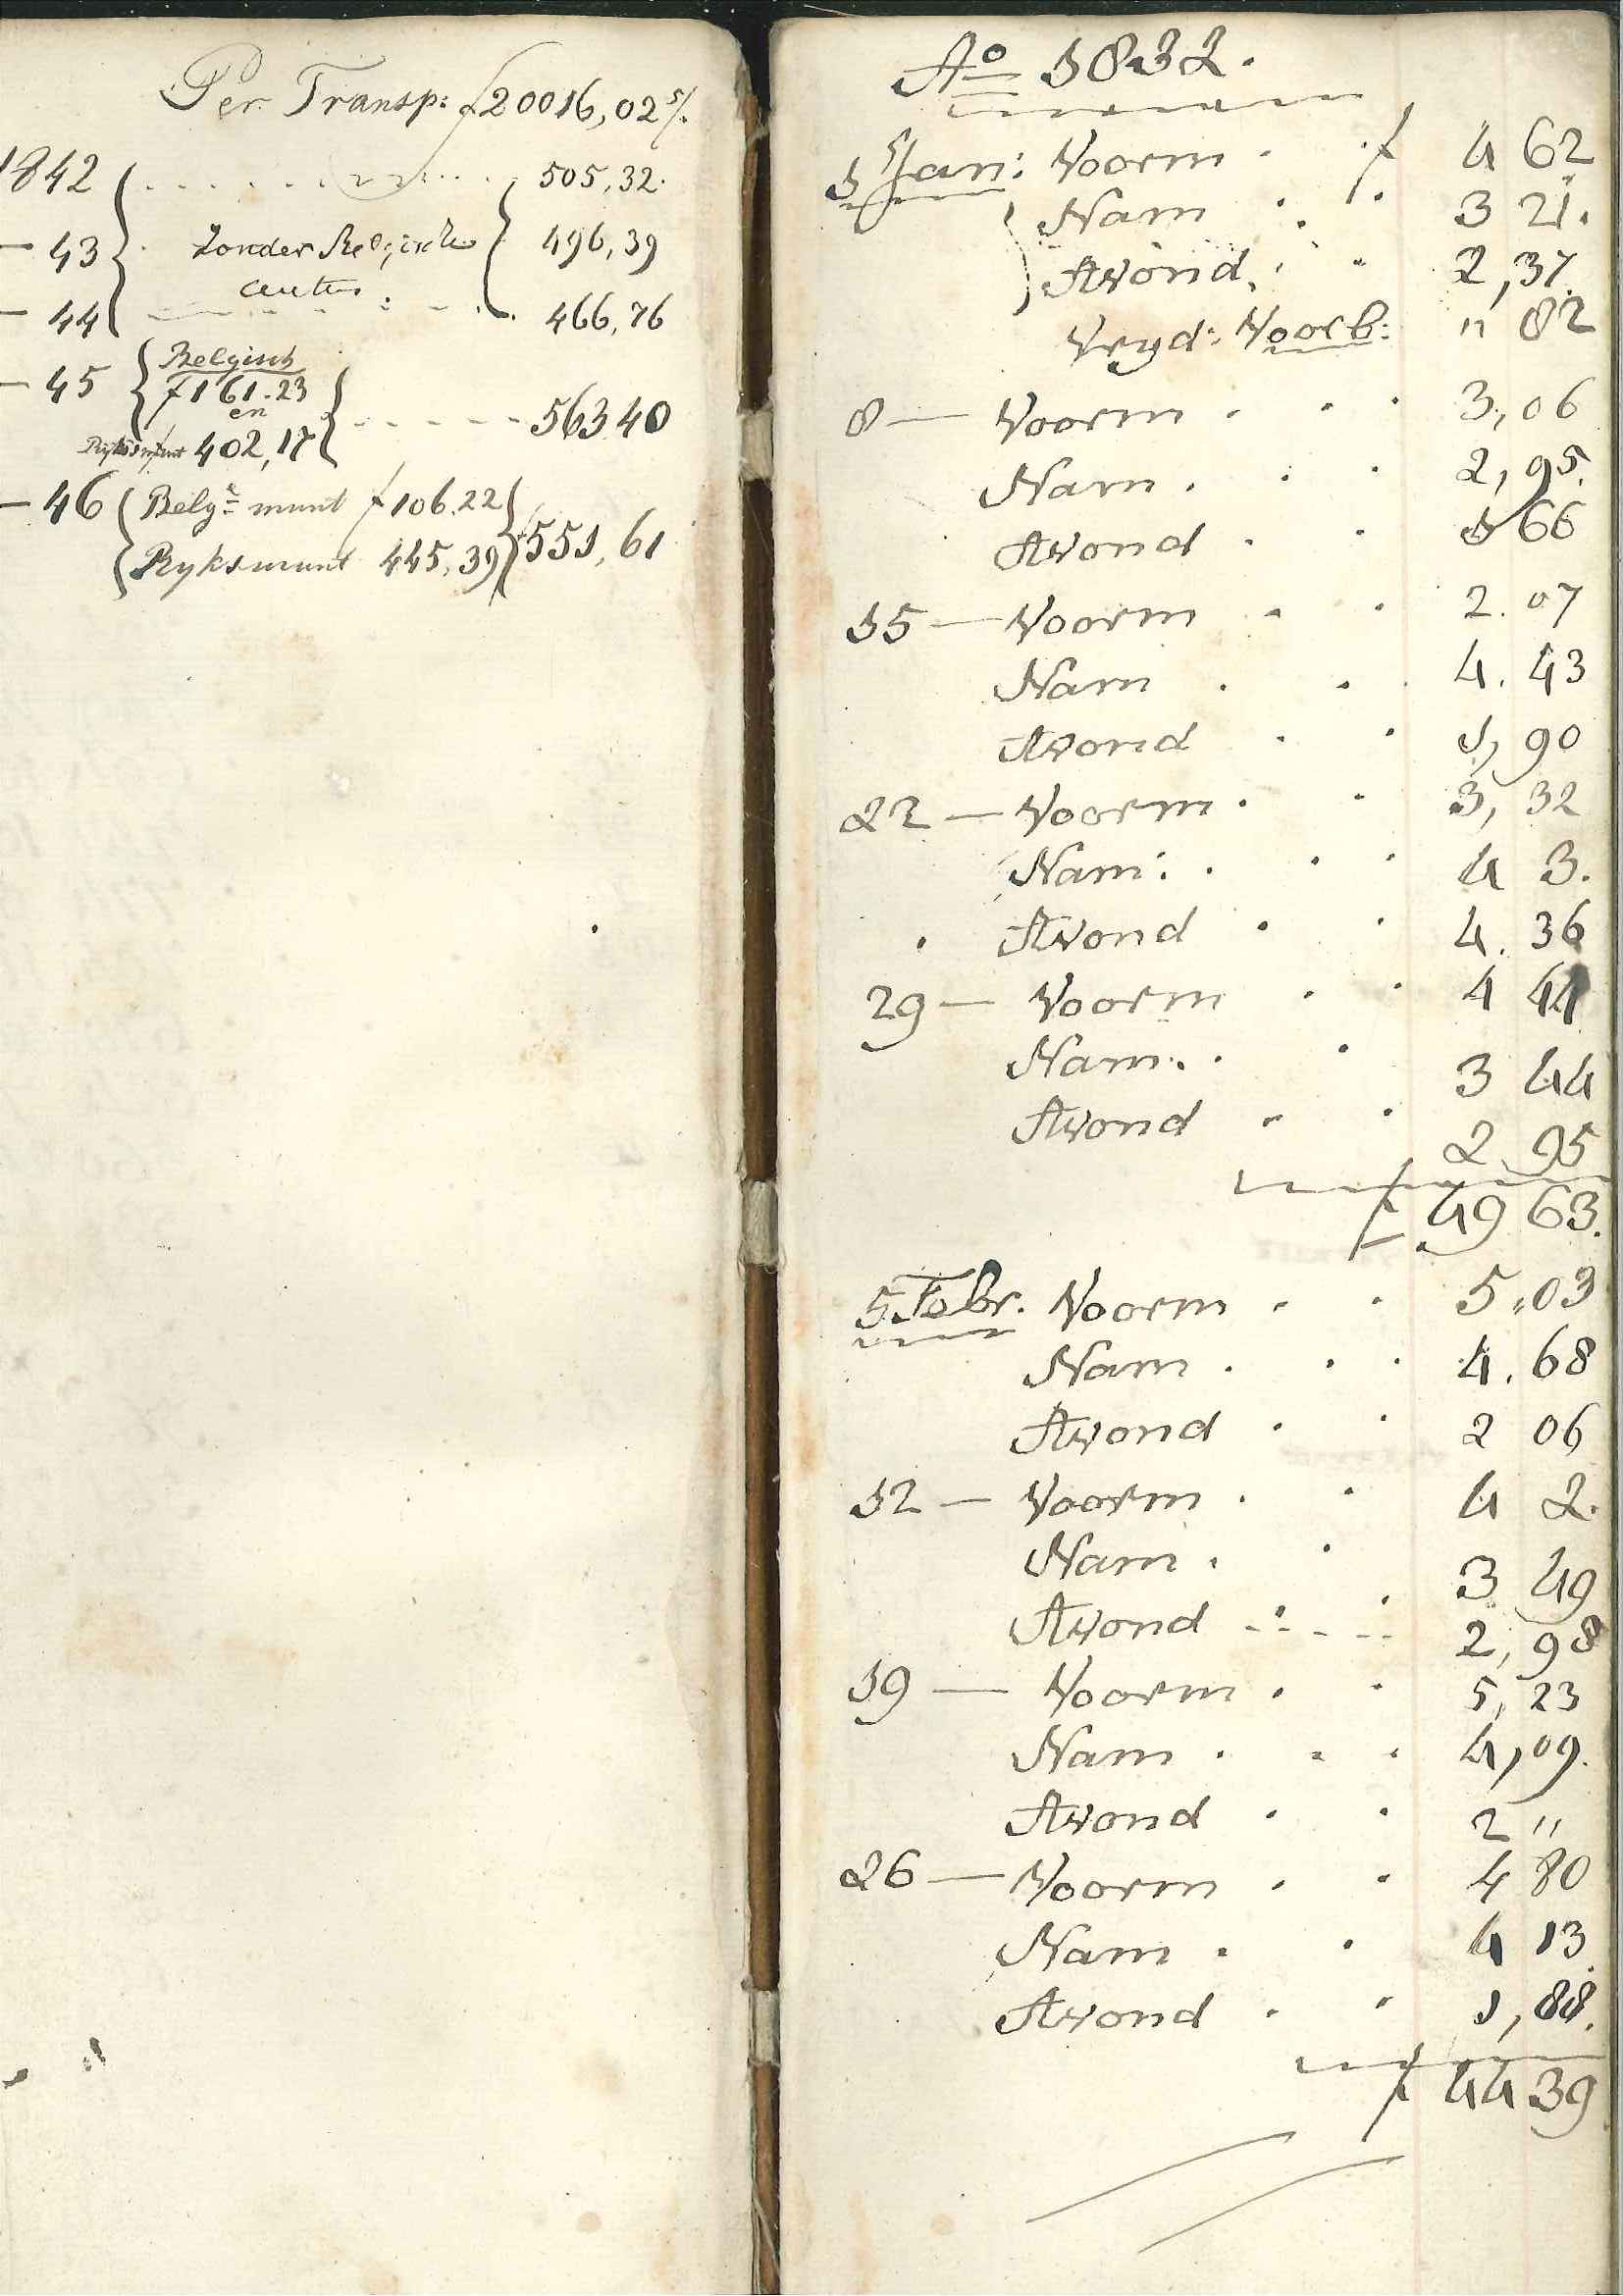 Register met collecte-opbrengsten, 1832. GAG.Arch.herv.kerk, inv.nr. 327.